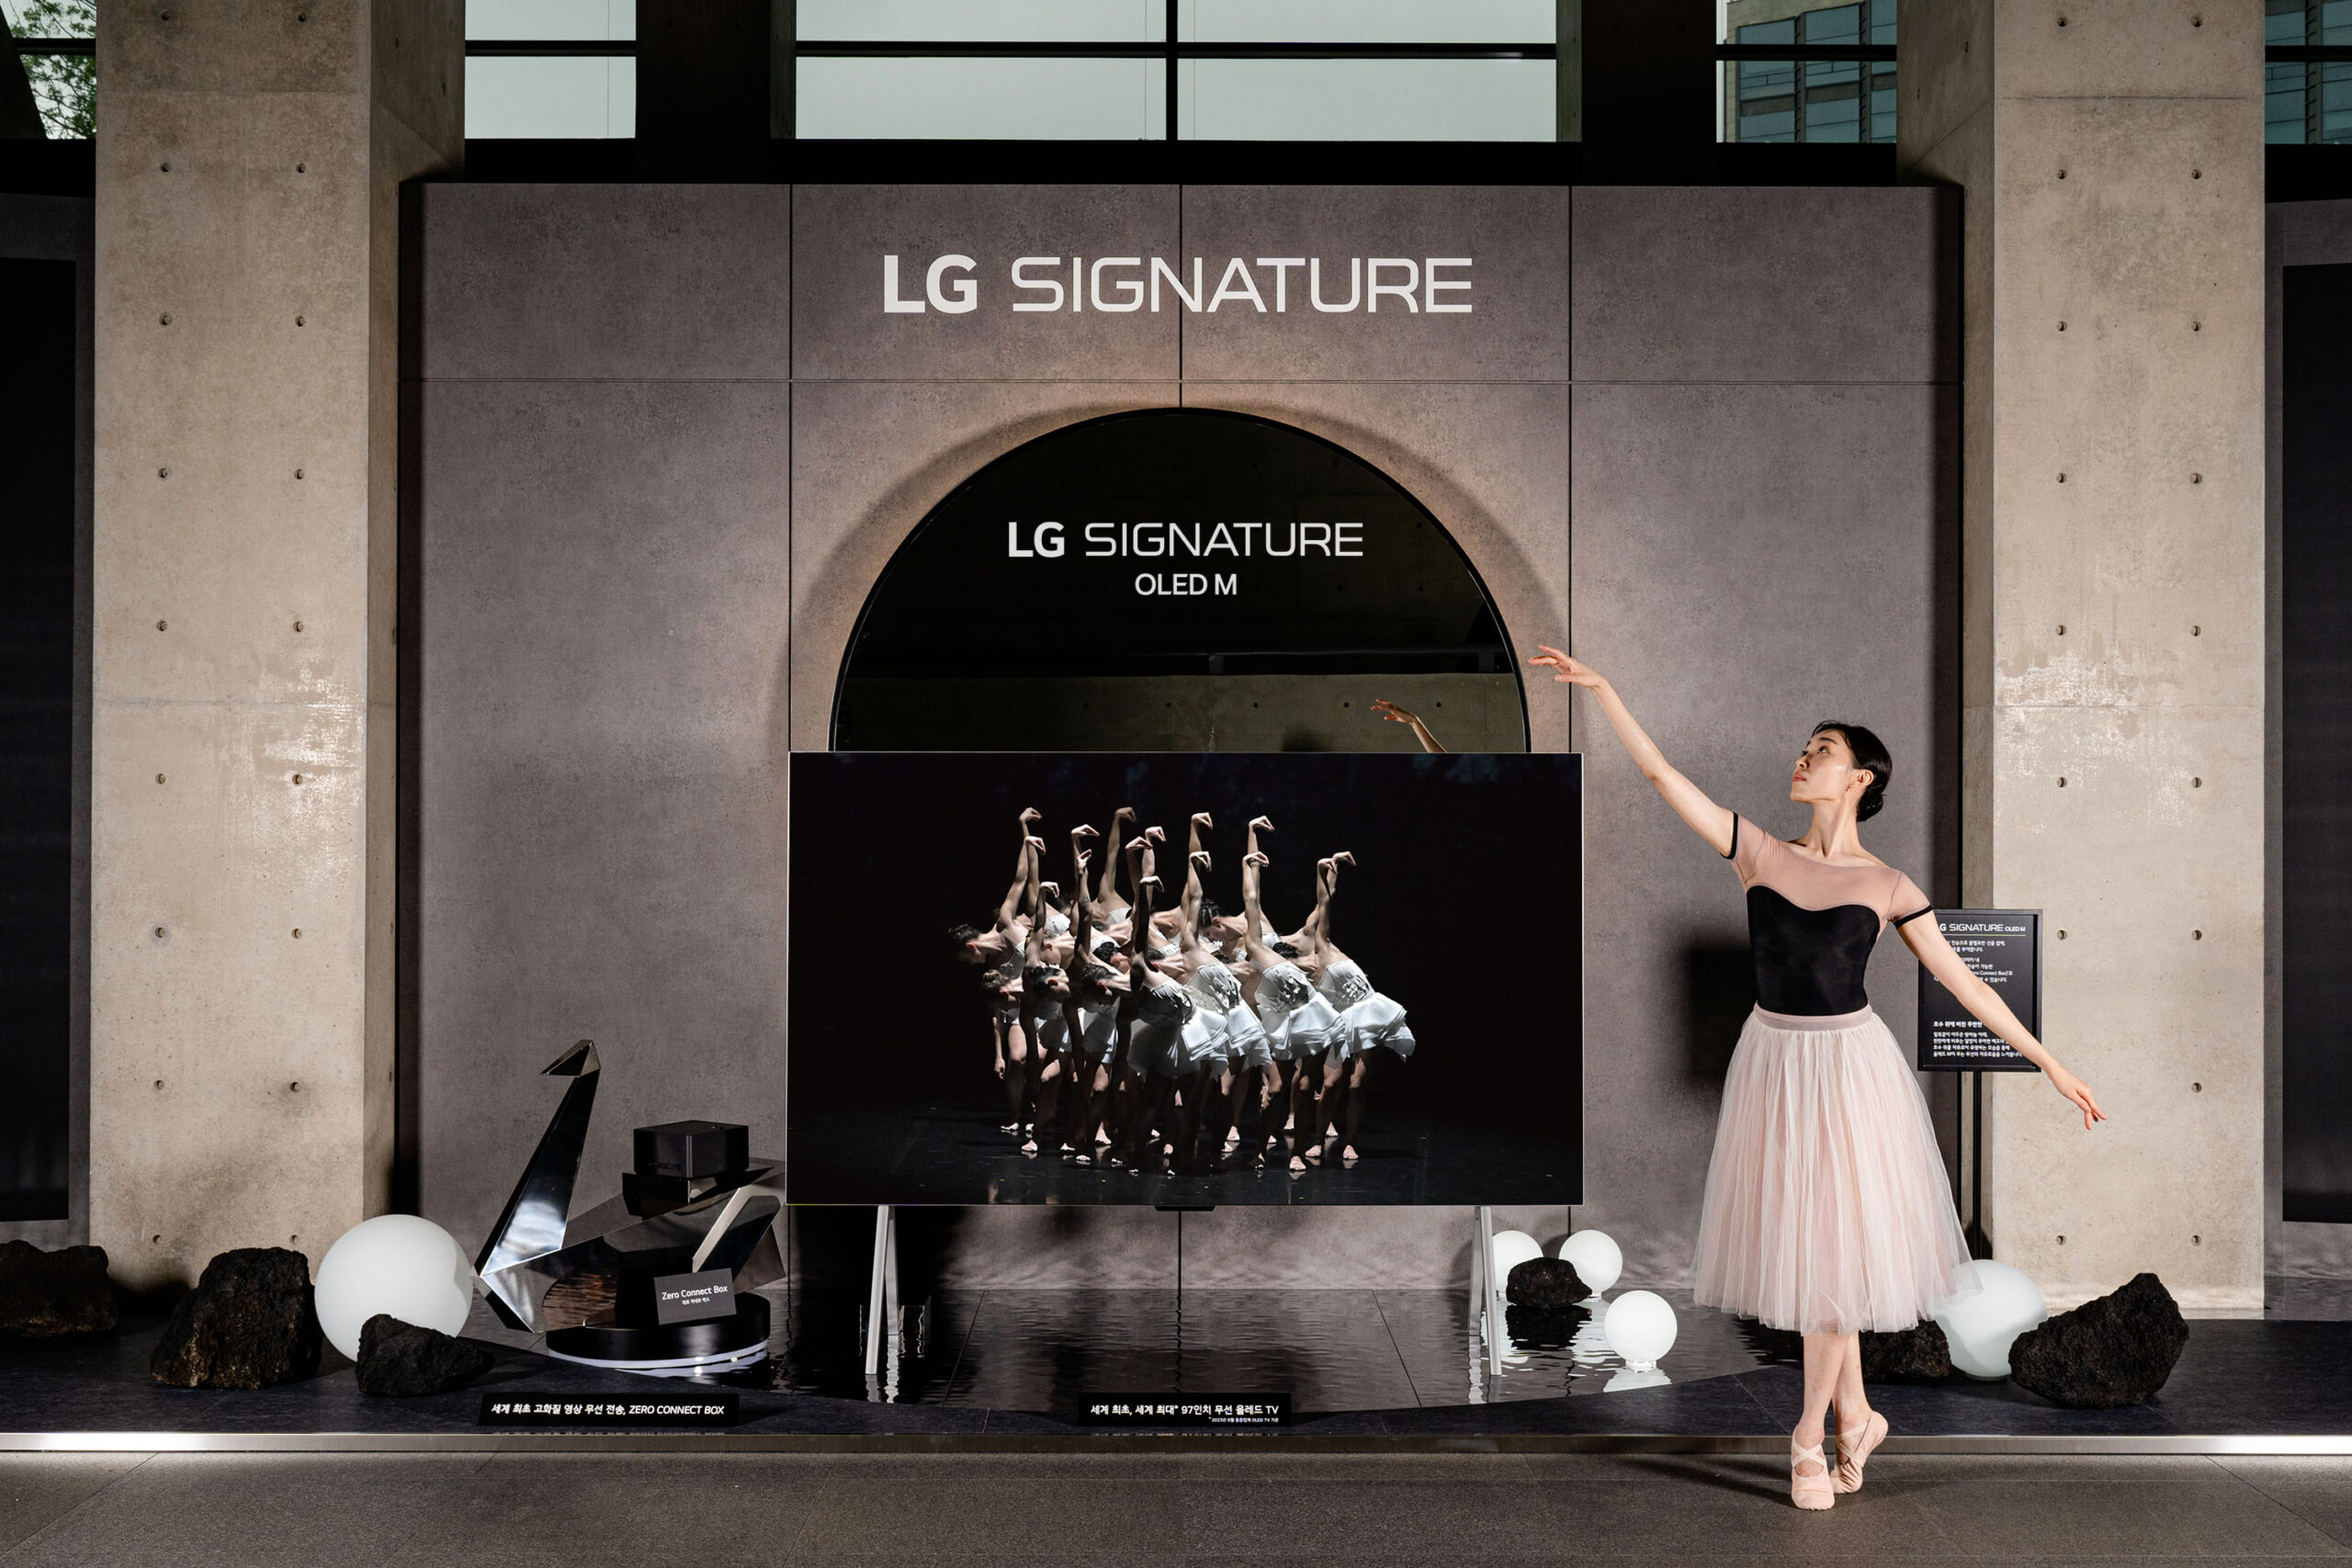 LG Showcases SIGNATURE OLED M TVs With 'Swan Lake' Performance Sponsorship